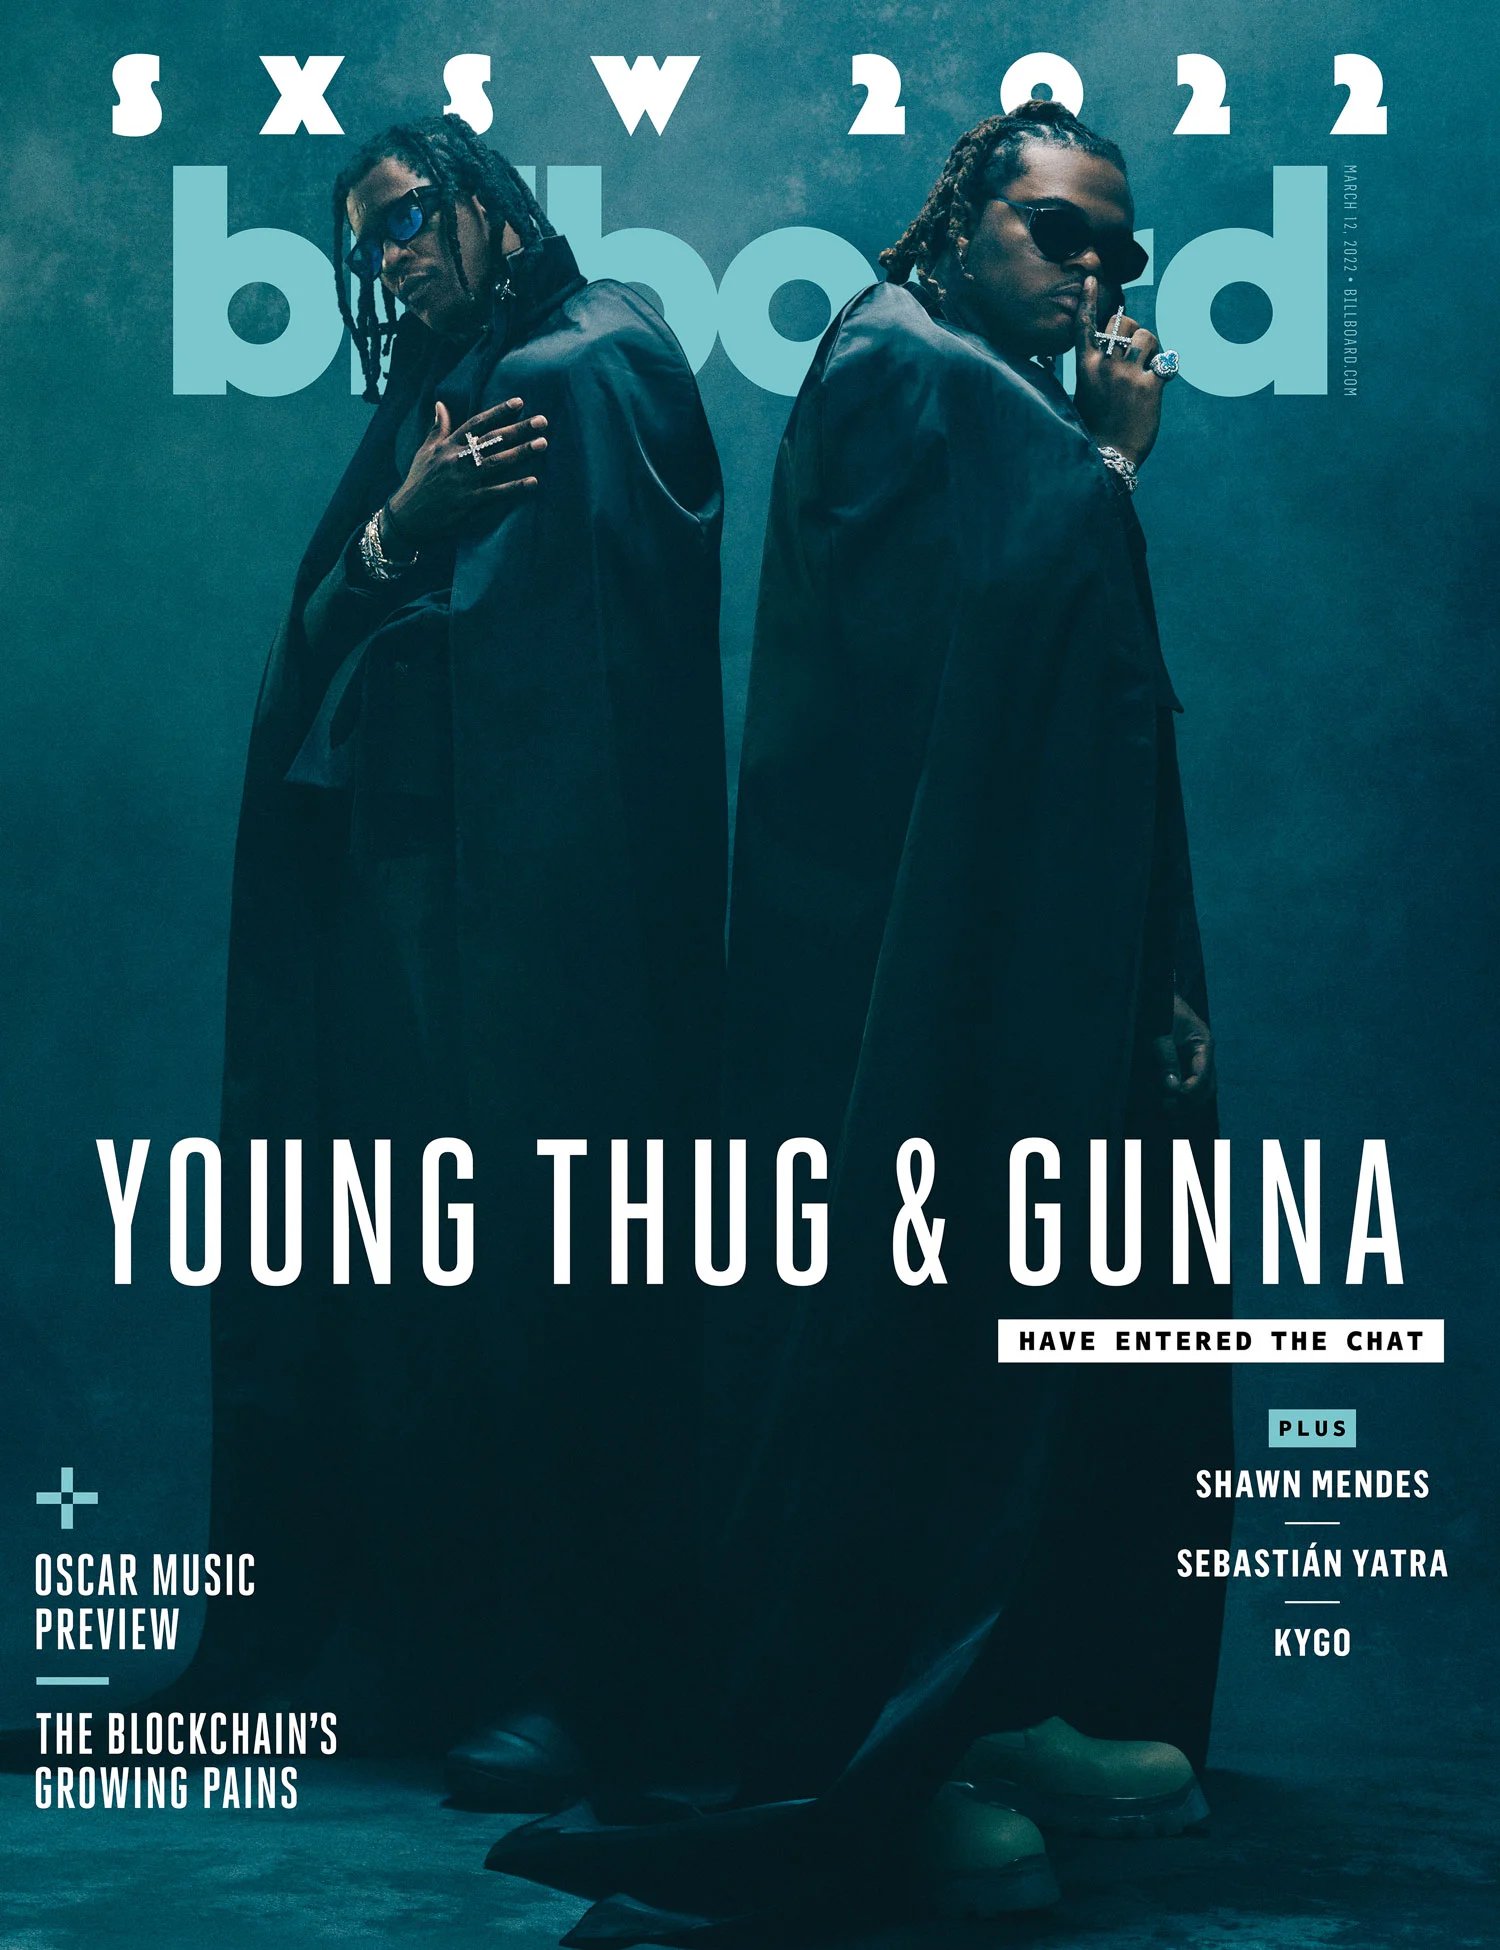 bb3-Young-Thug-and-Gunna-cover-billboard-1500.jpg